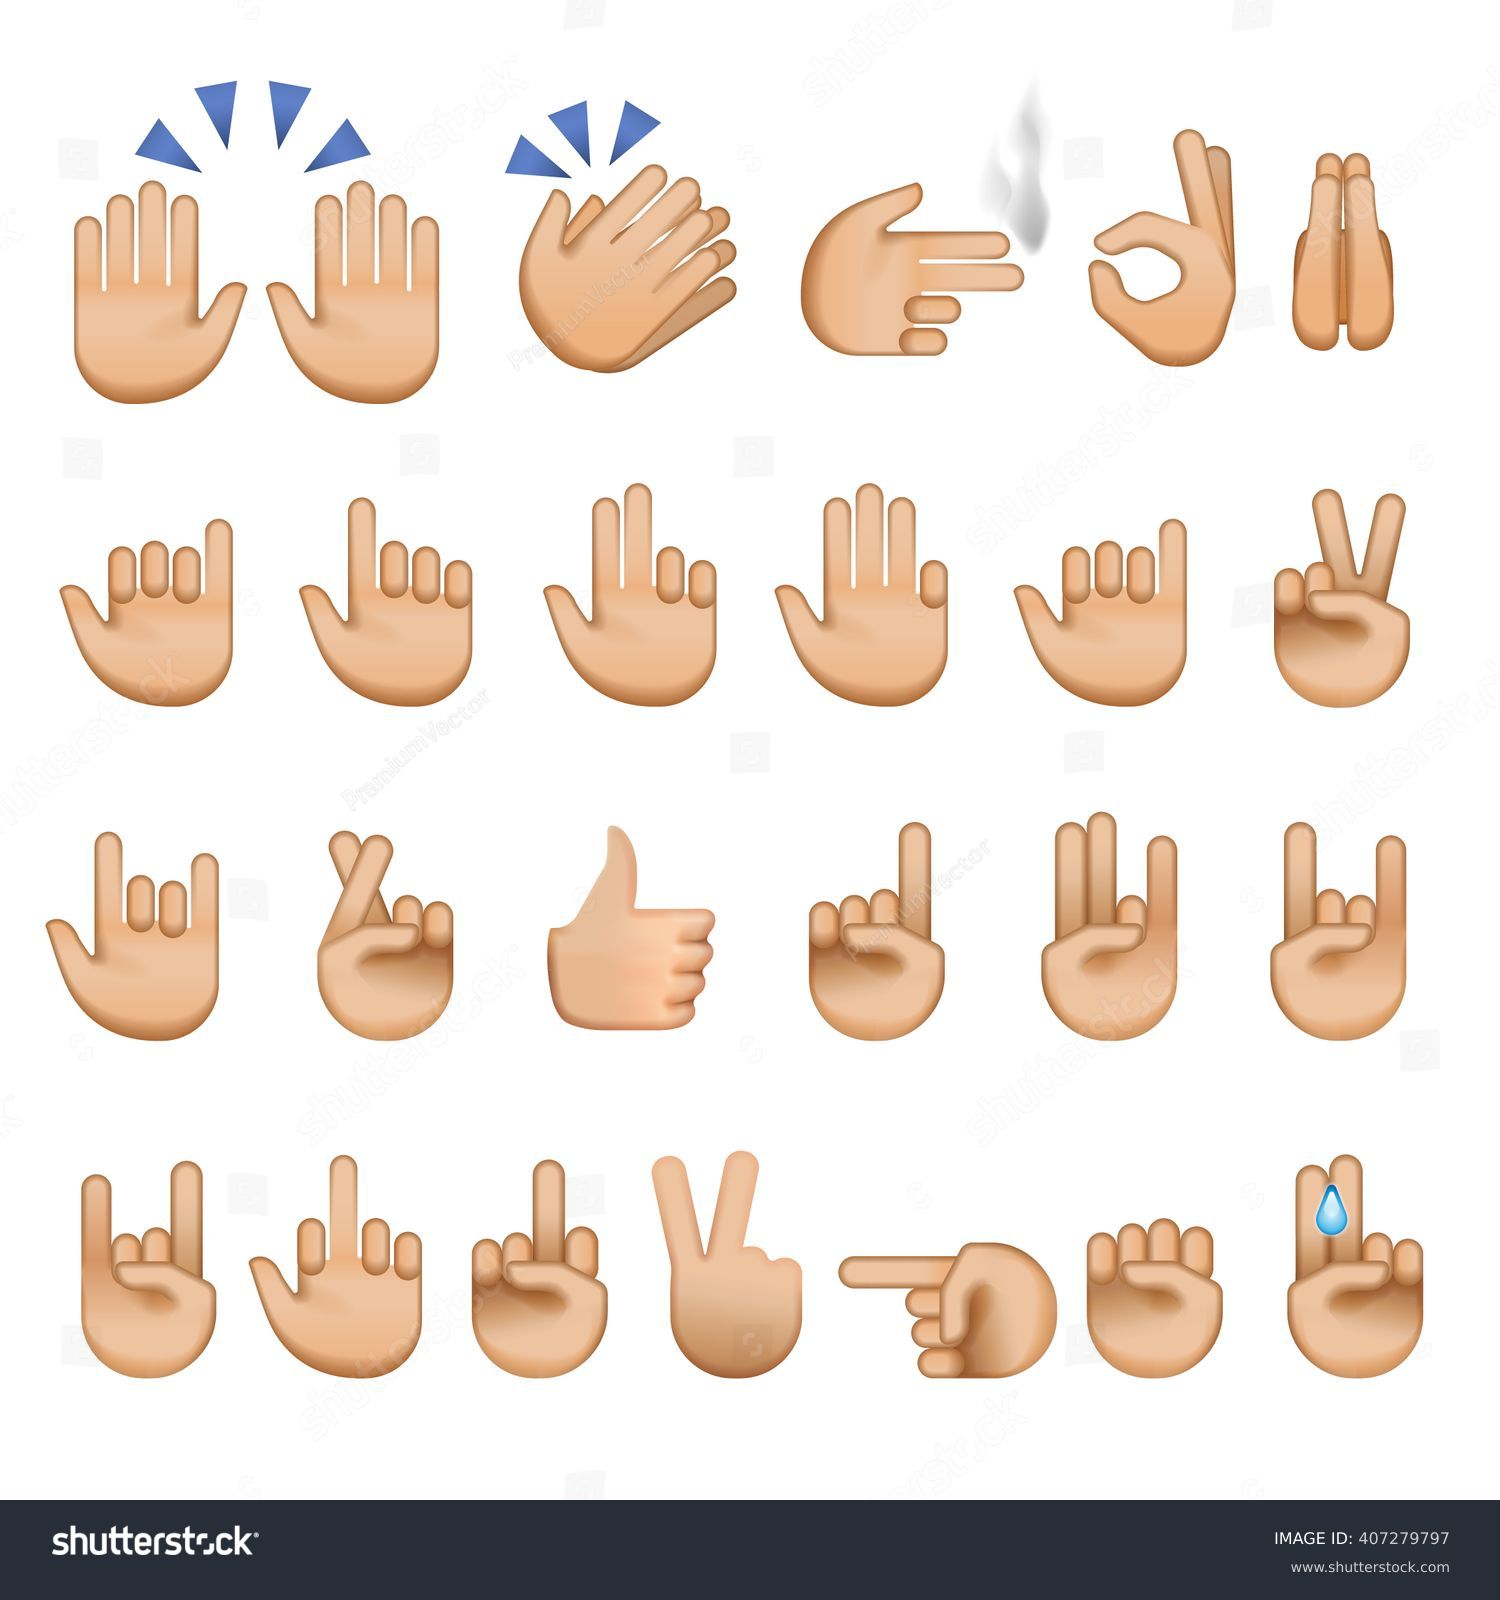 Set Of Hands Icons And Symbols, Emoji, Different Hands, Gestures ...